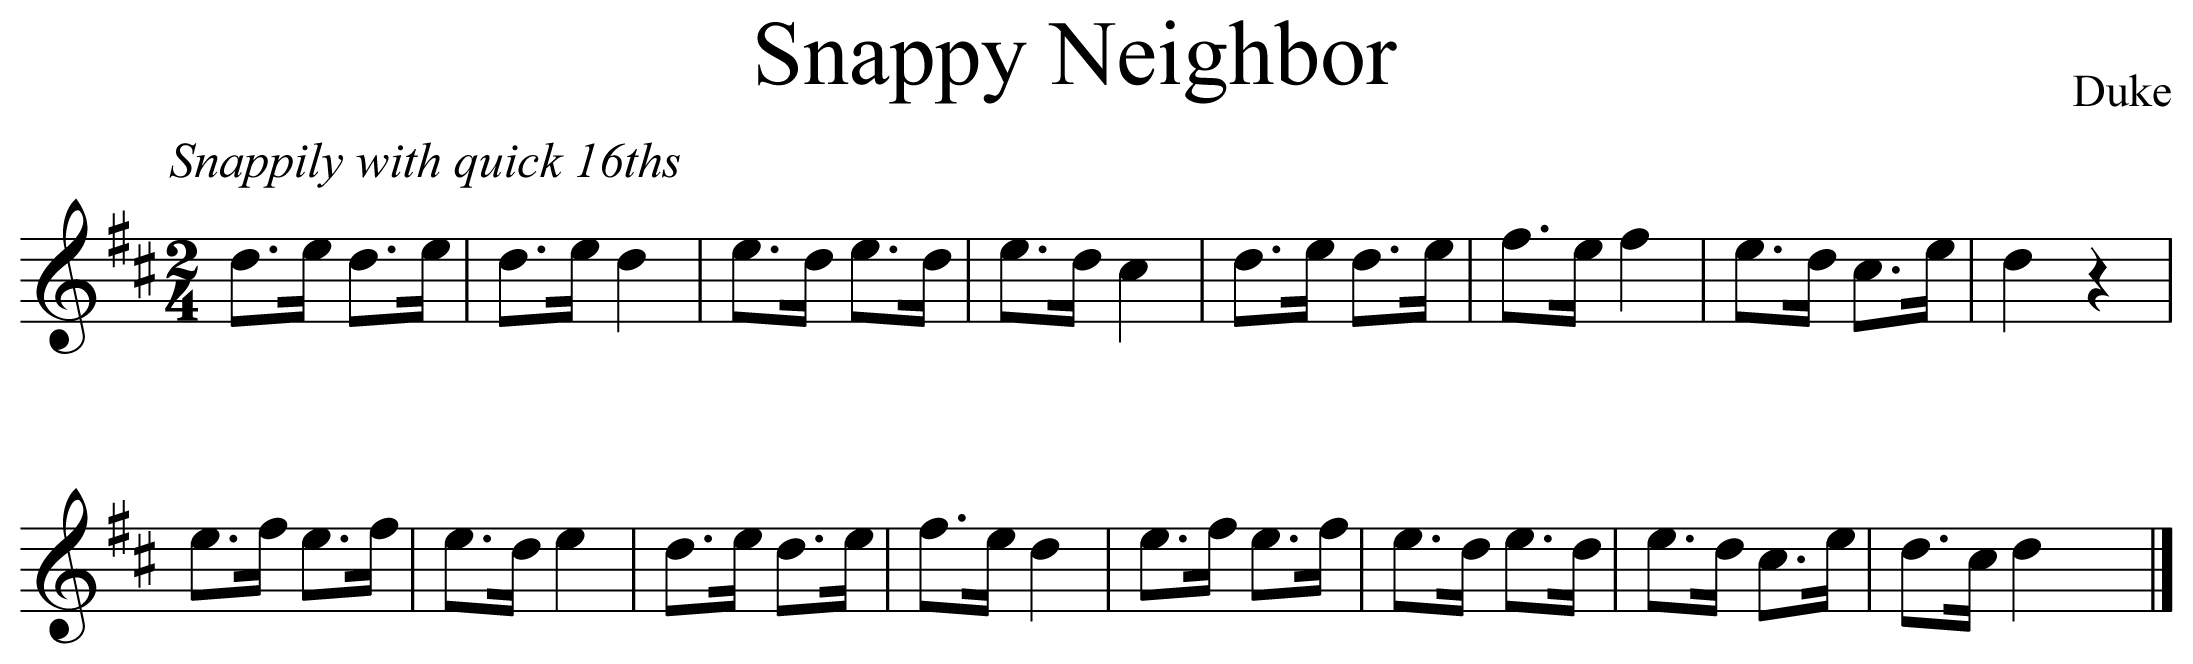 Snappy Neighbor Music Notation Saxophone